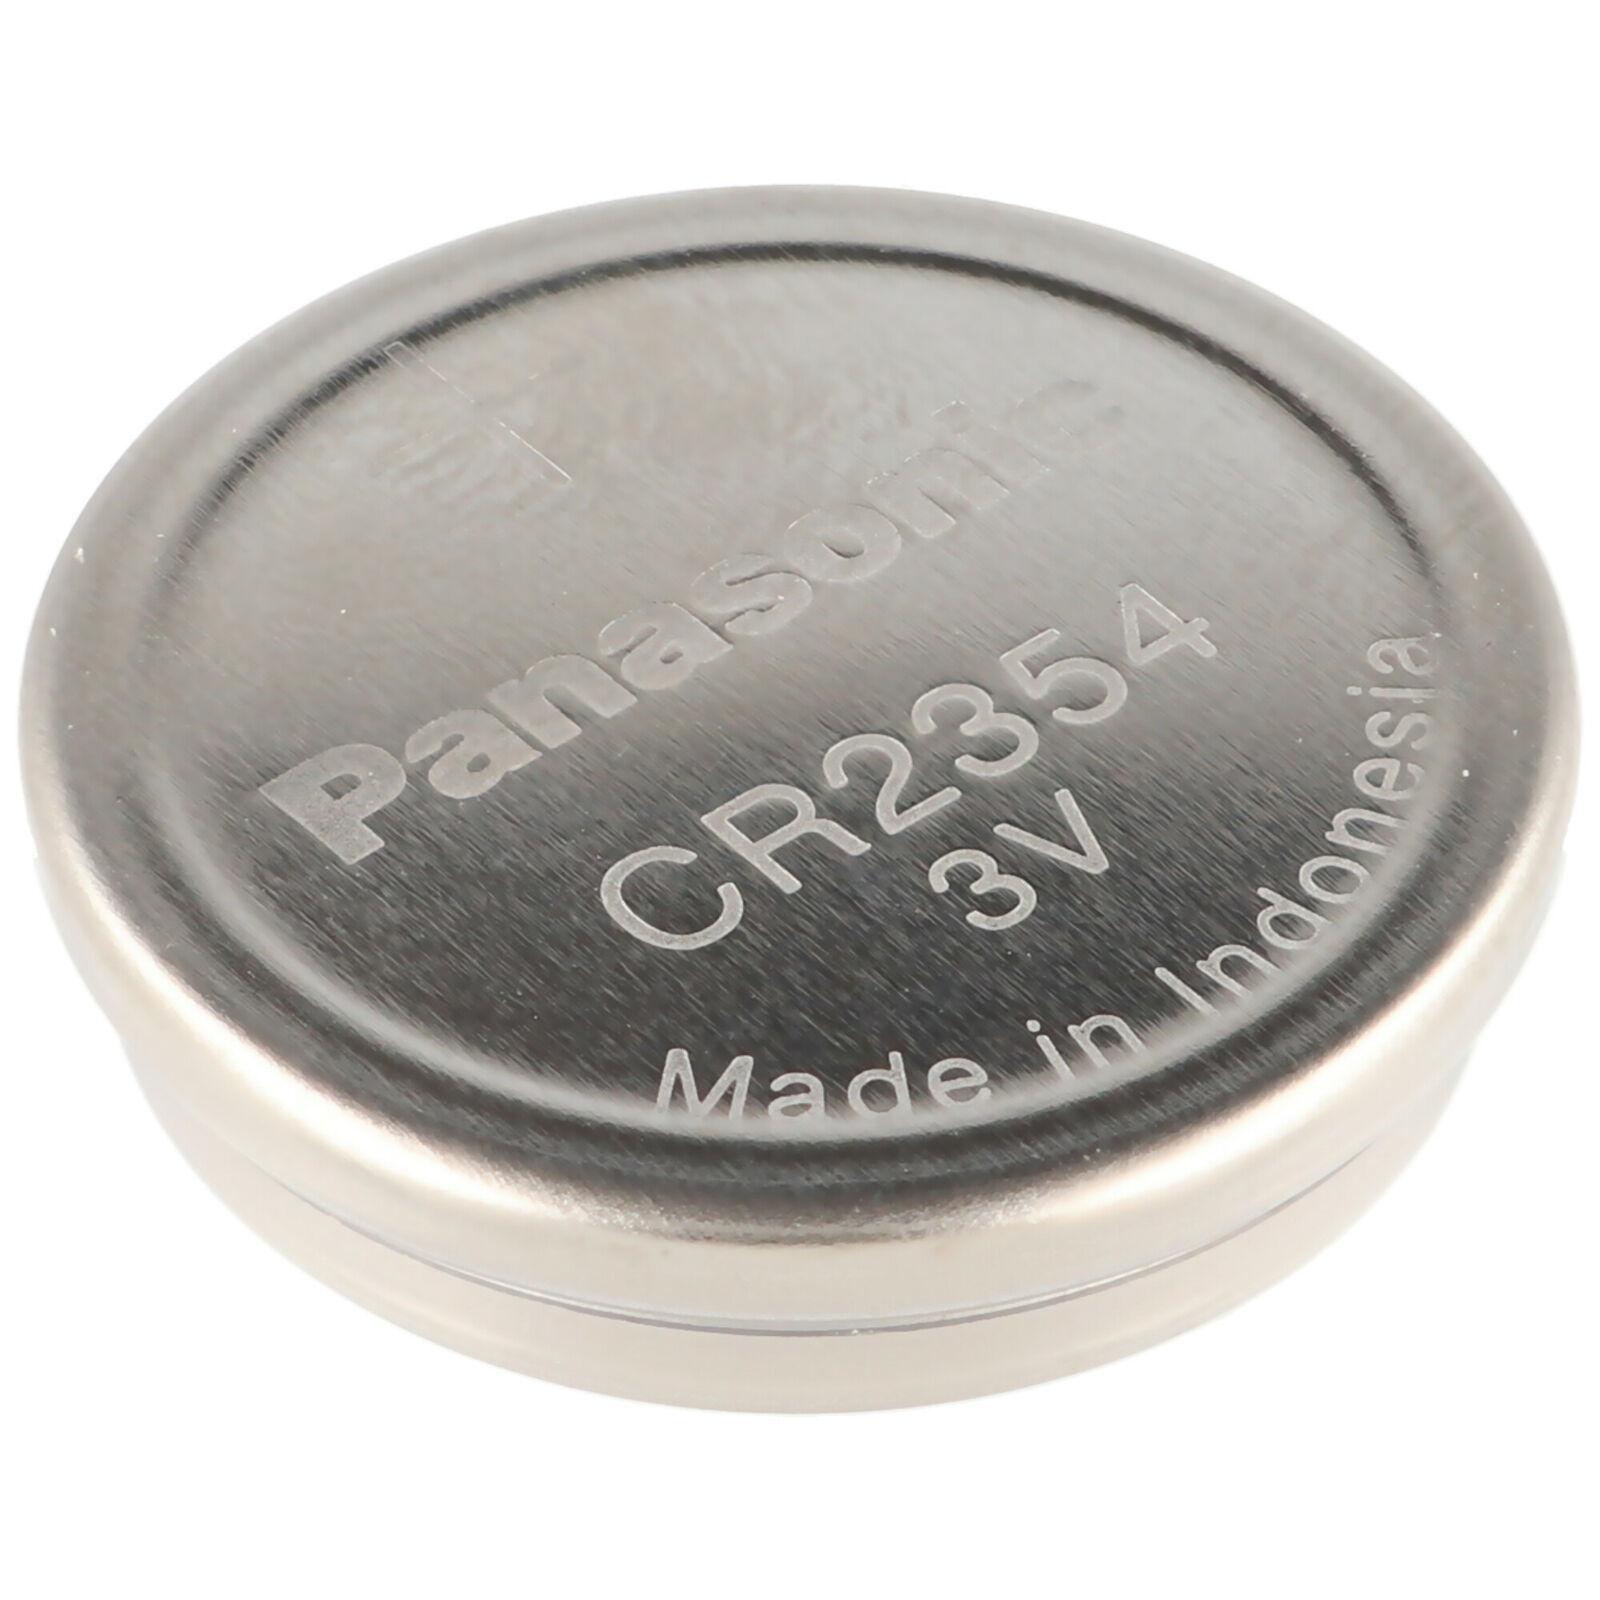 Baterie Panasonic CR2354, Lithium, 3V, 32ks